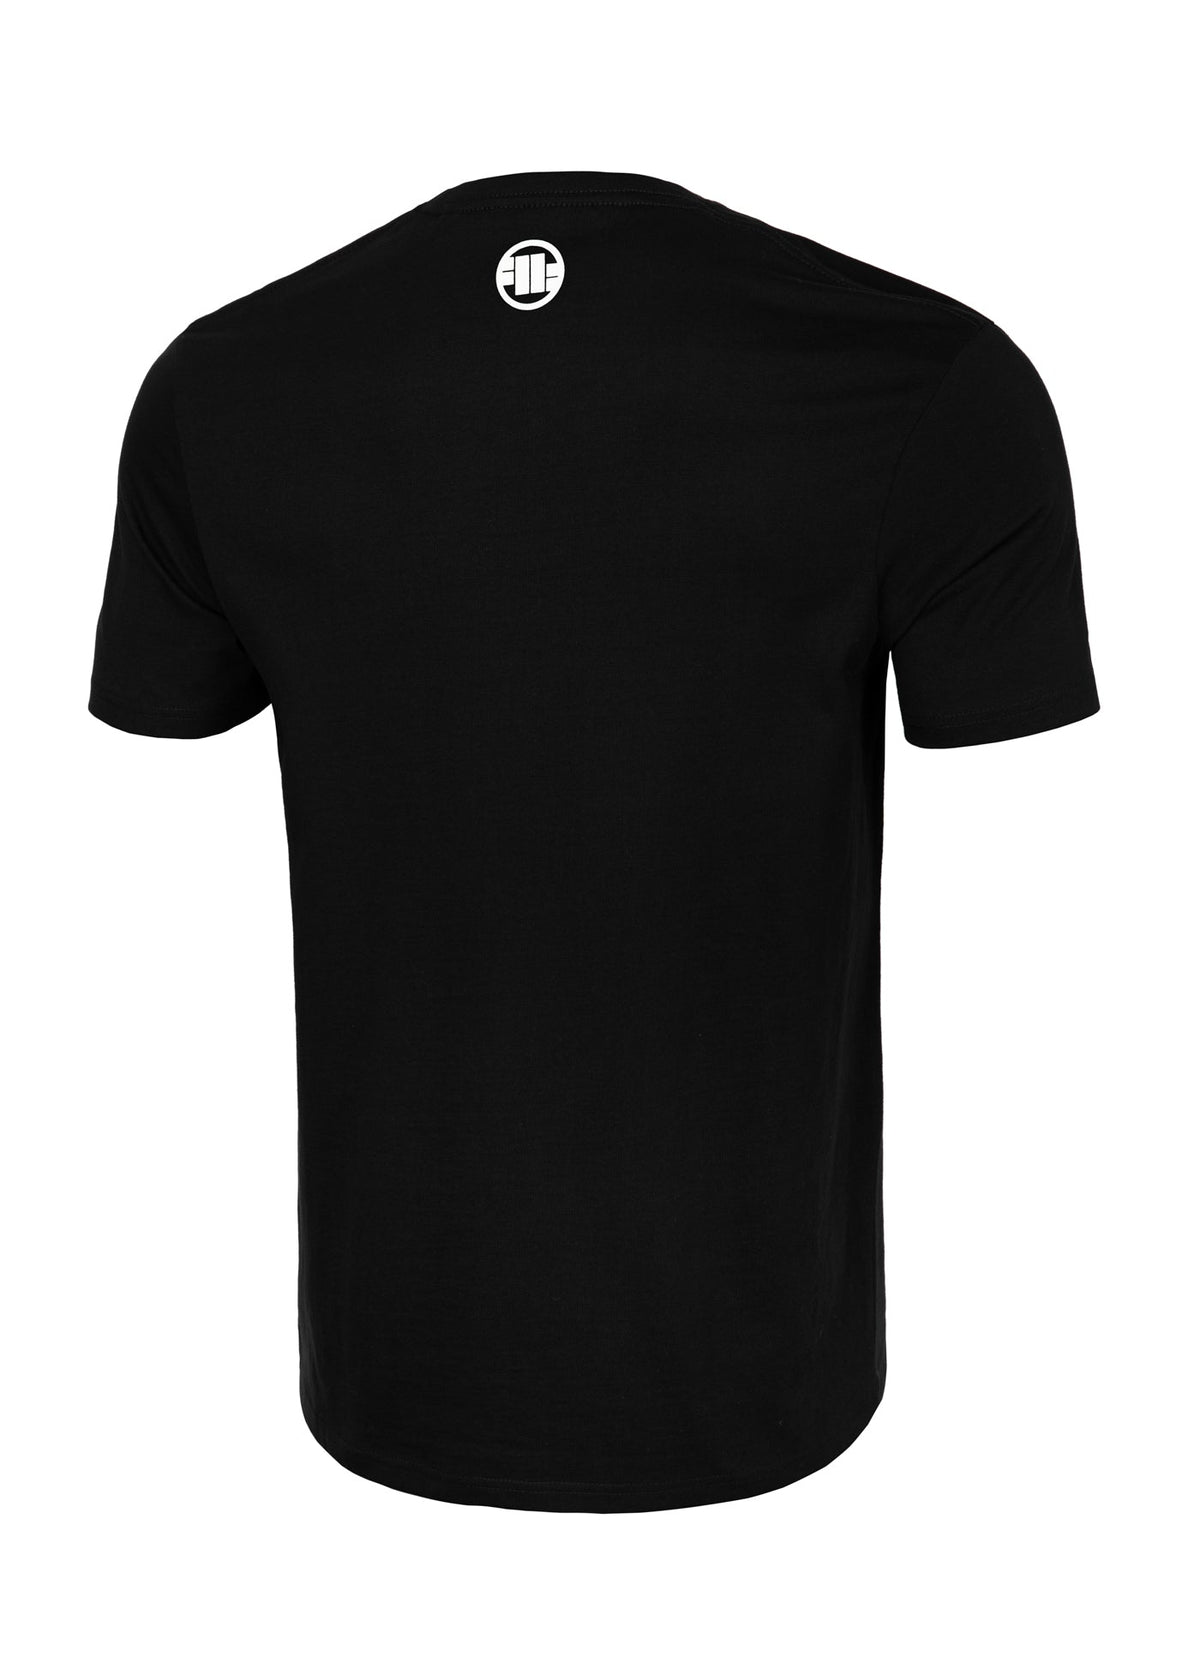 STEEL LOGO Black T-shirt